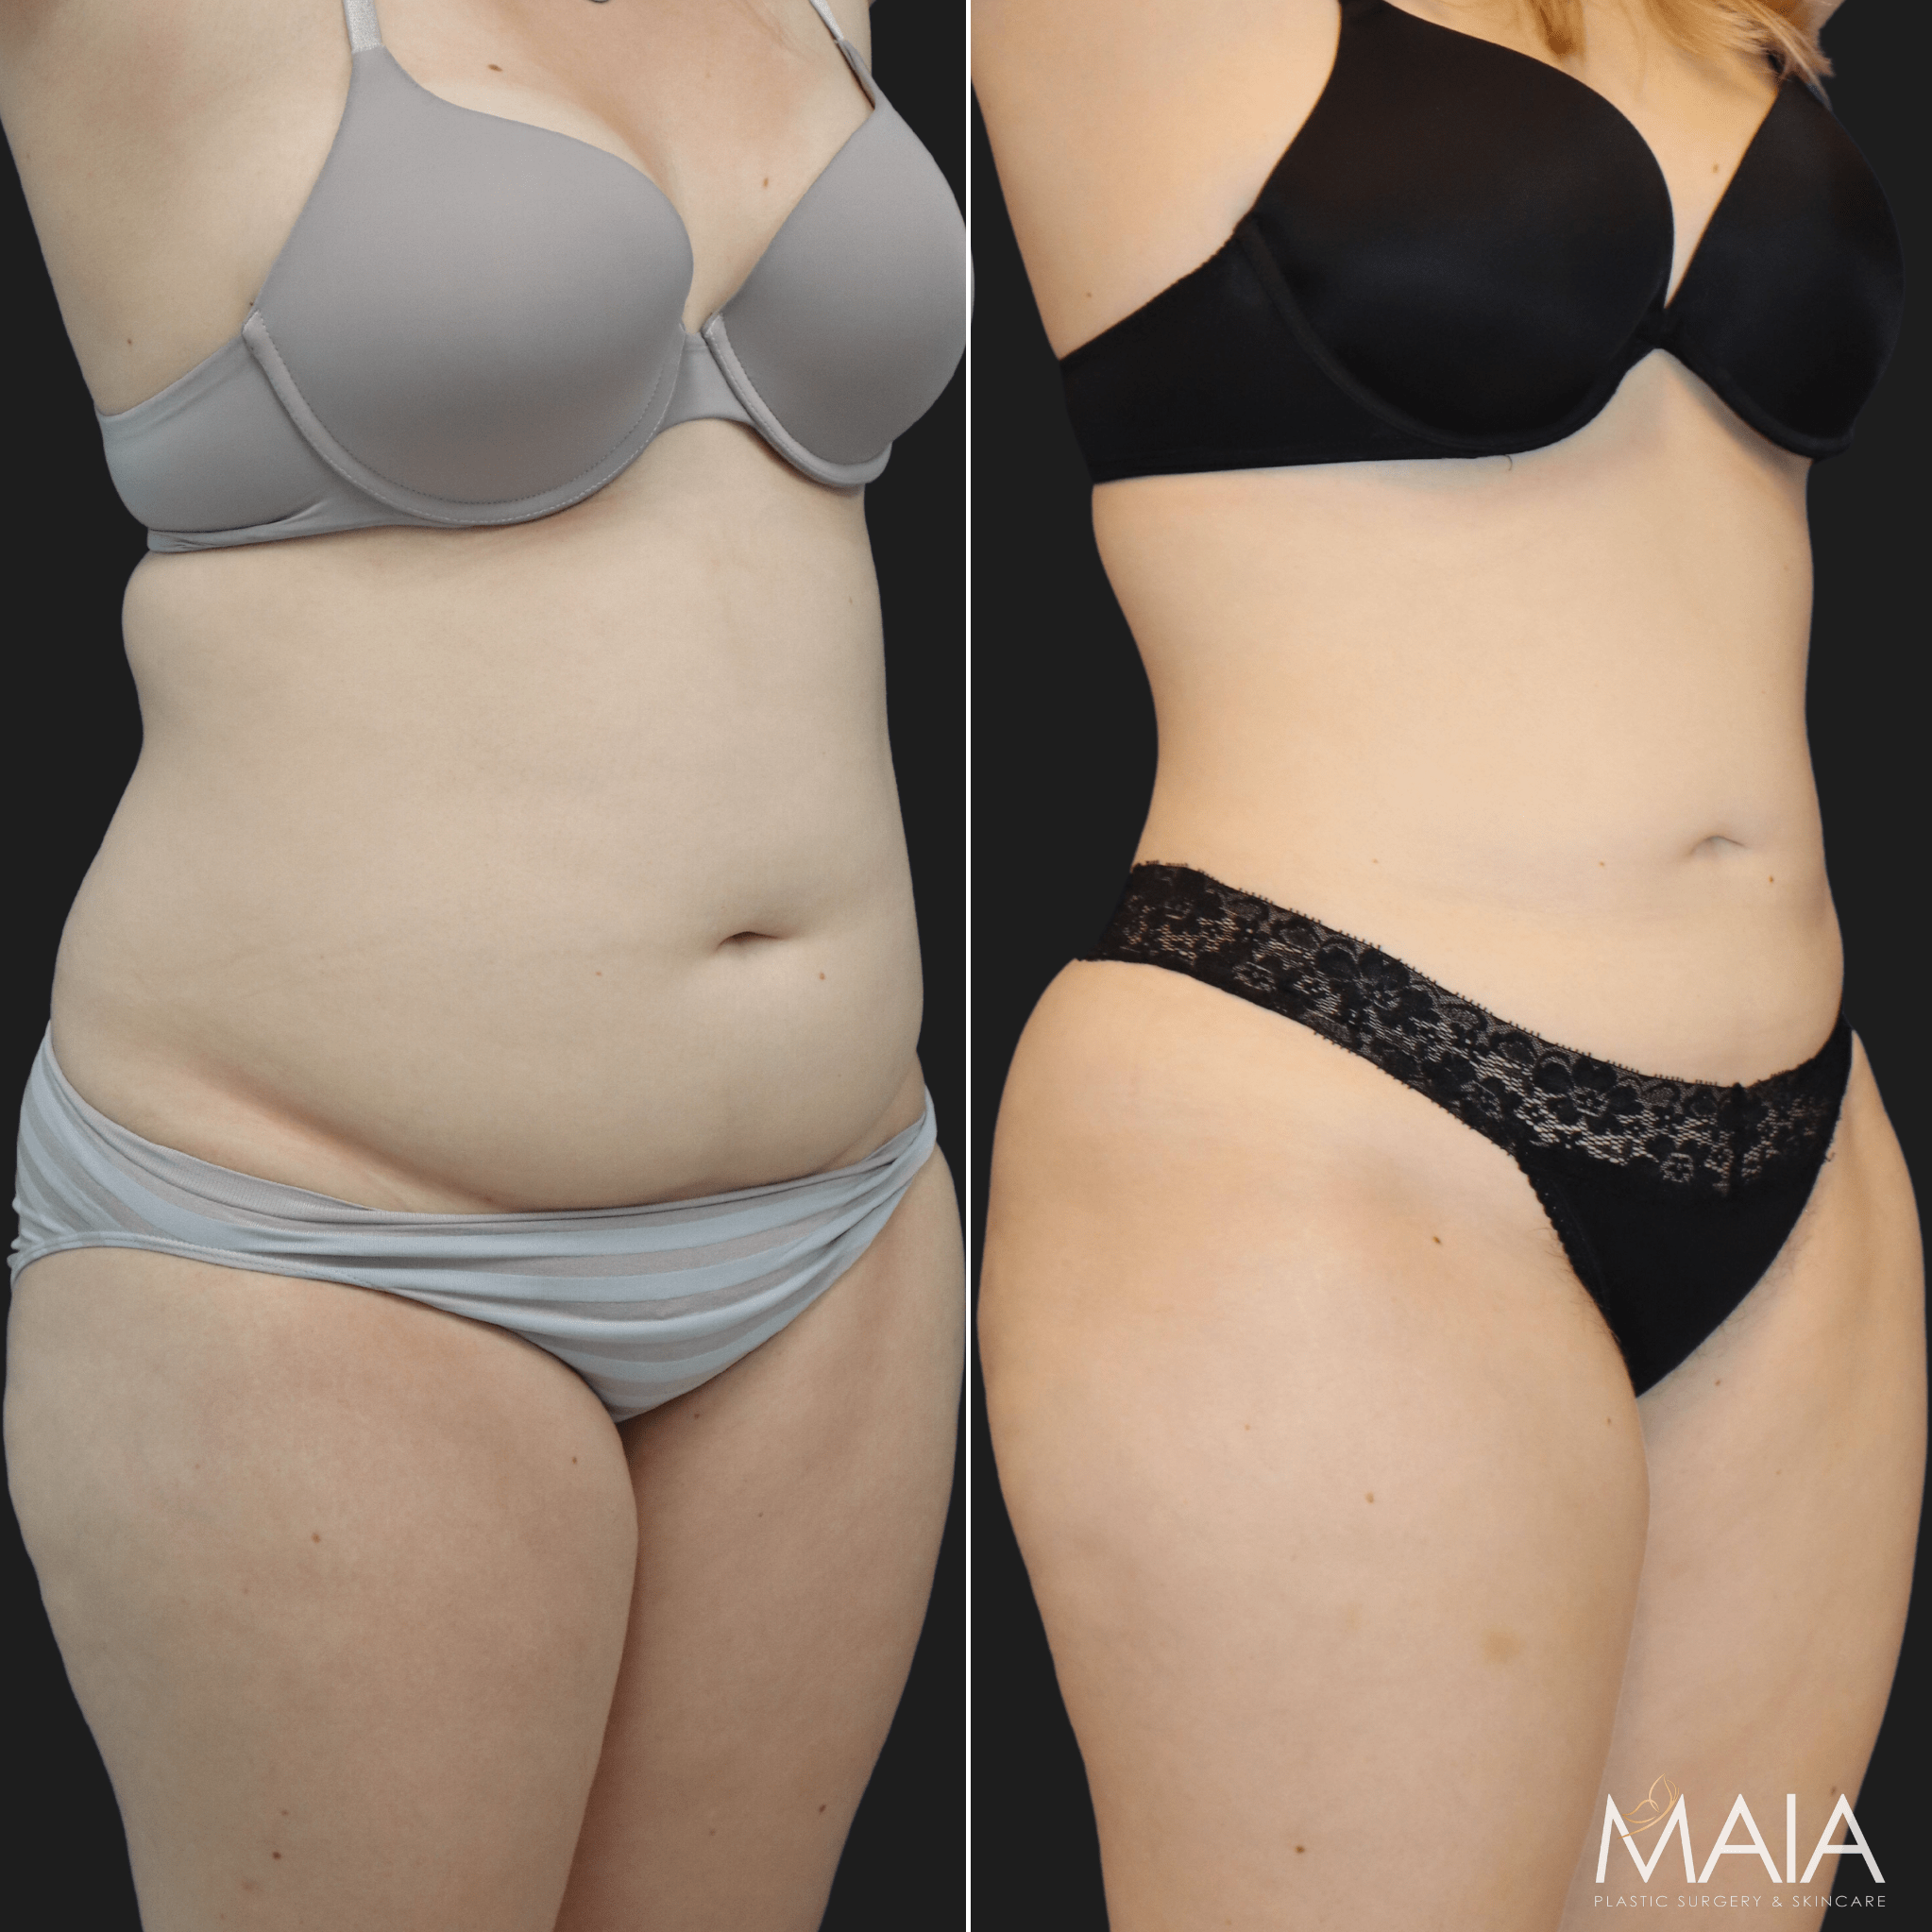 Bra Line and Mid/Upper Back Liposuction